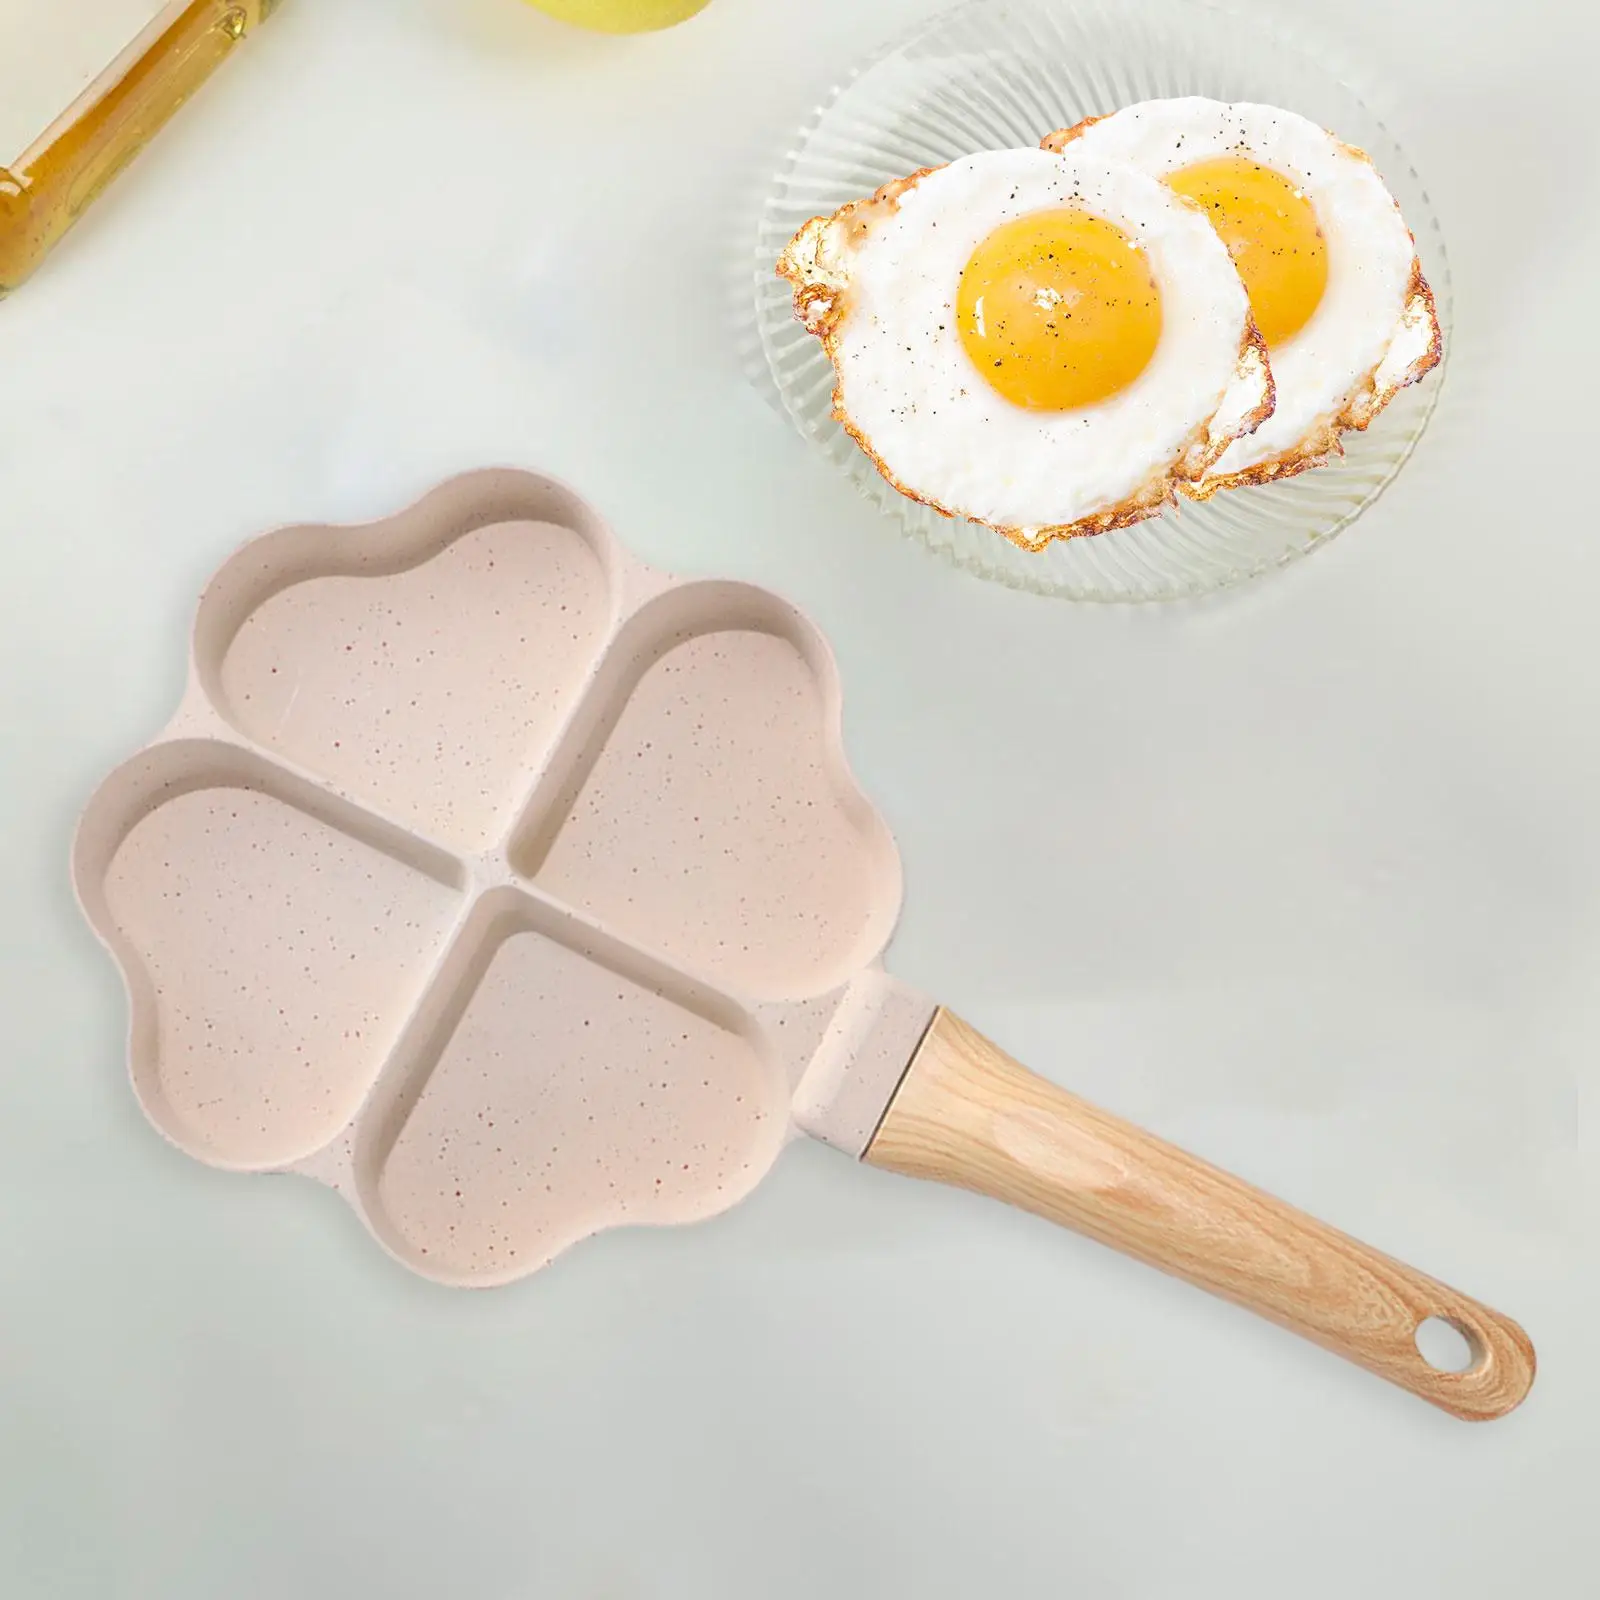 Omelet Pan Breakfast Maker Cookware with 4 Holes Divided Egg Skillet Heat Resistant Handle Egg Cooker Pan for Baking Vegetable